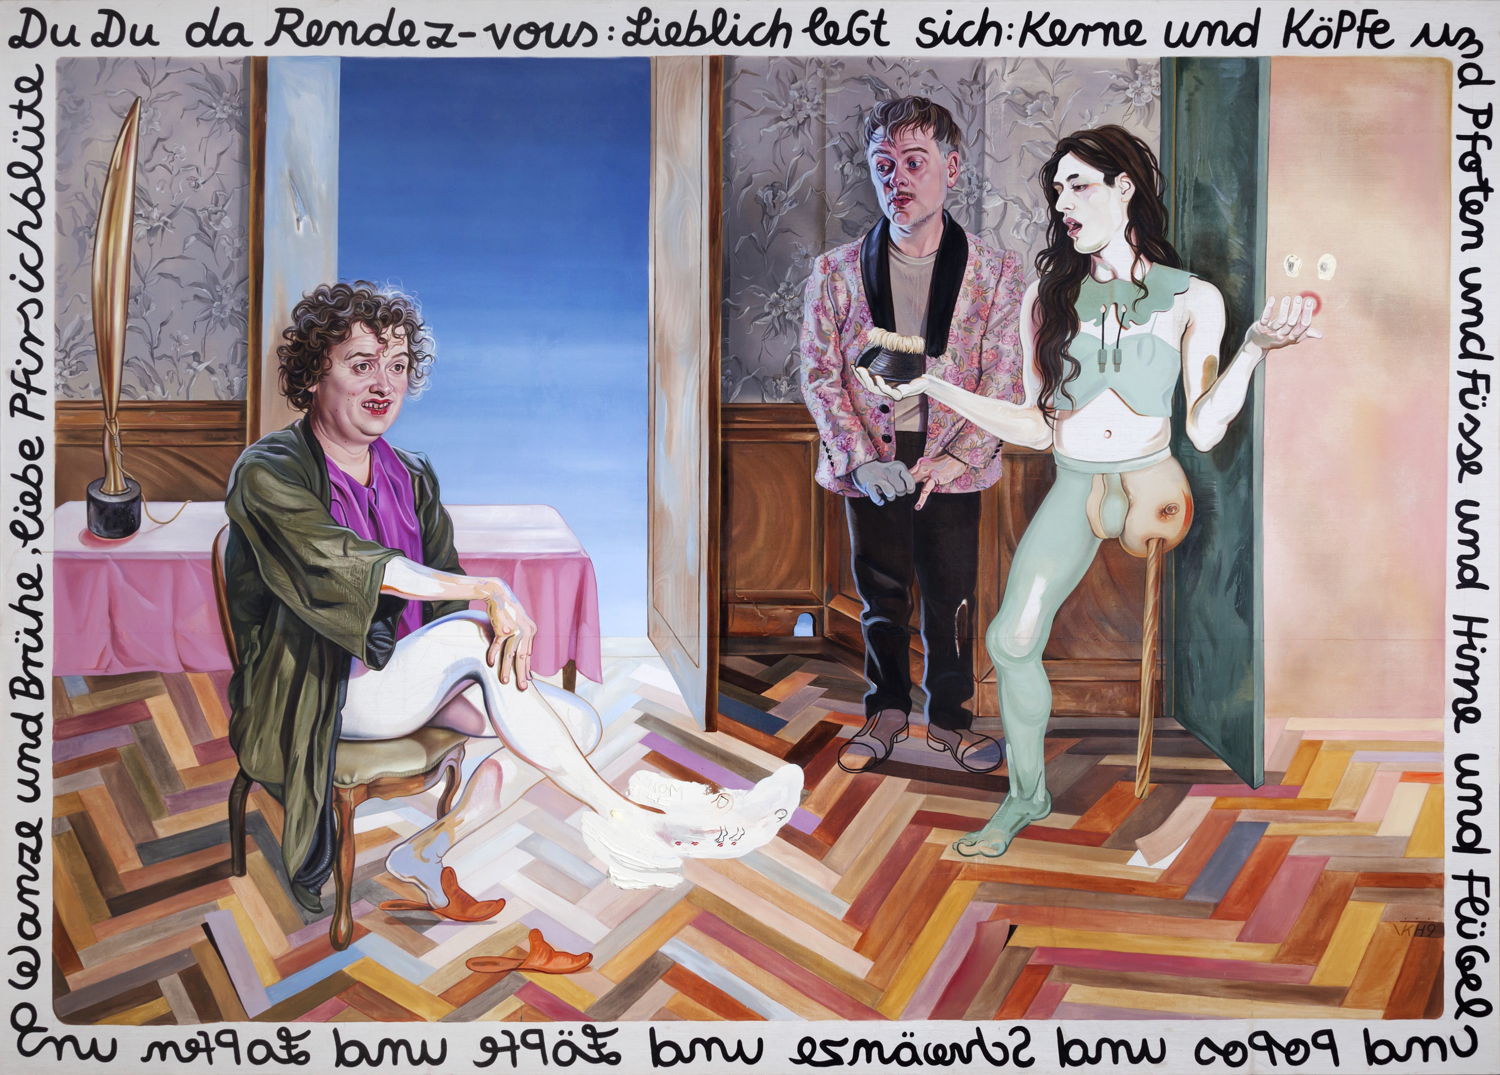 KATI HECK, Probe Pflanzung, 2019. Oil on canvas, 250 x 350 cm. Courtesy Tim Van Laere Gallery, Antwerp.